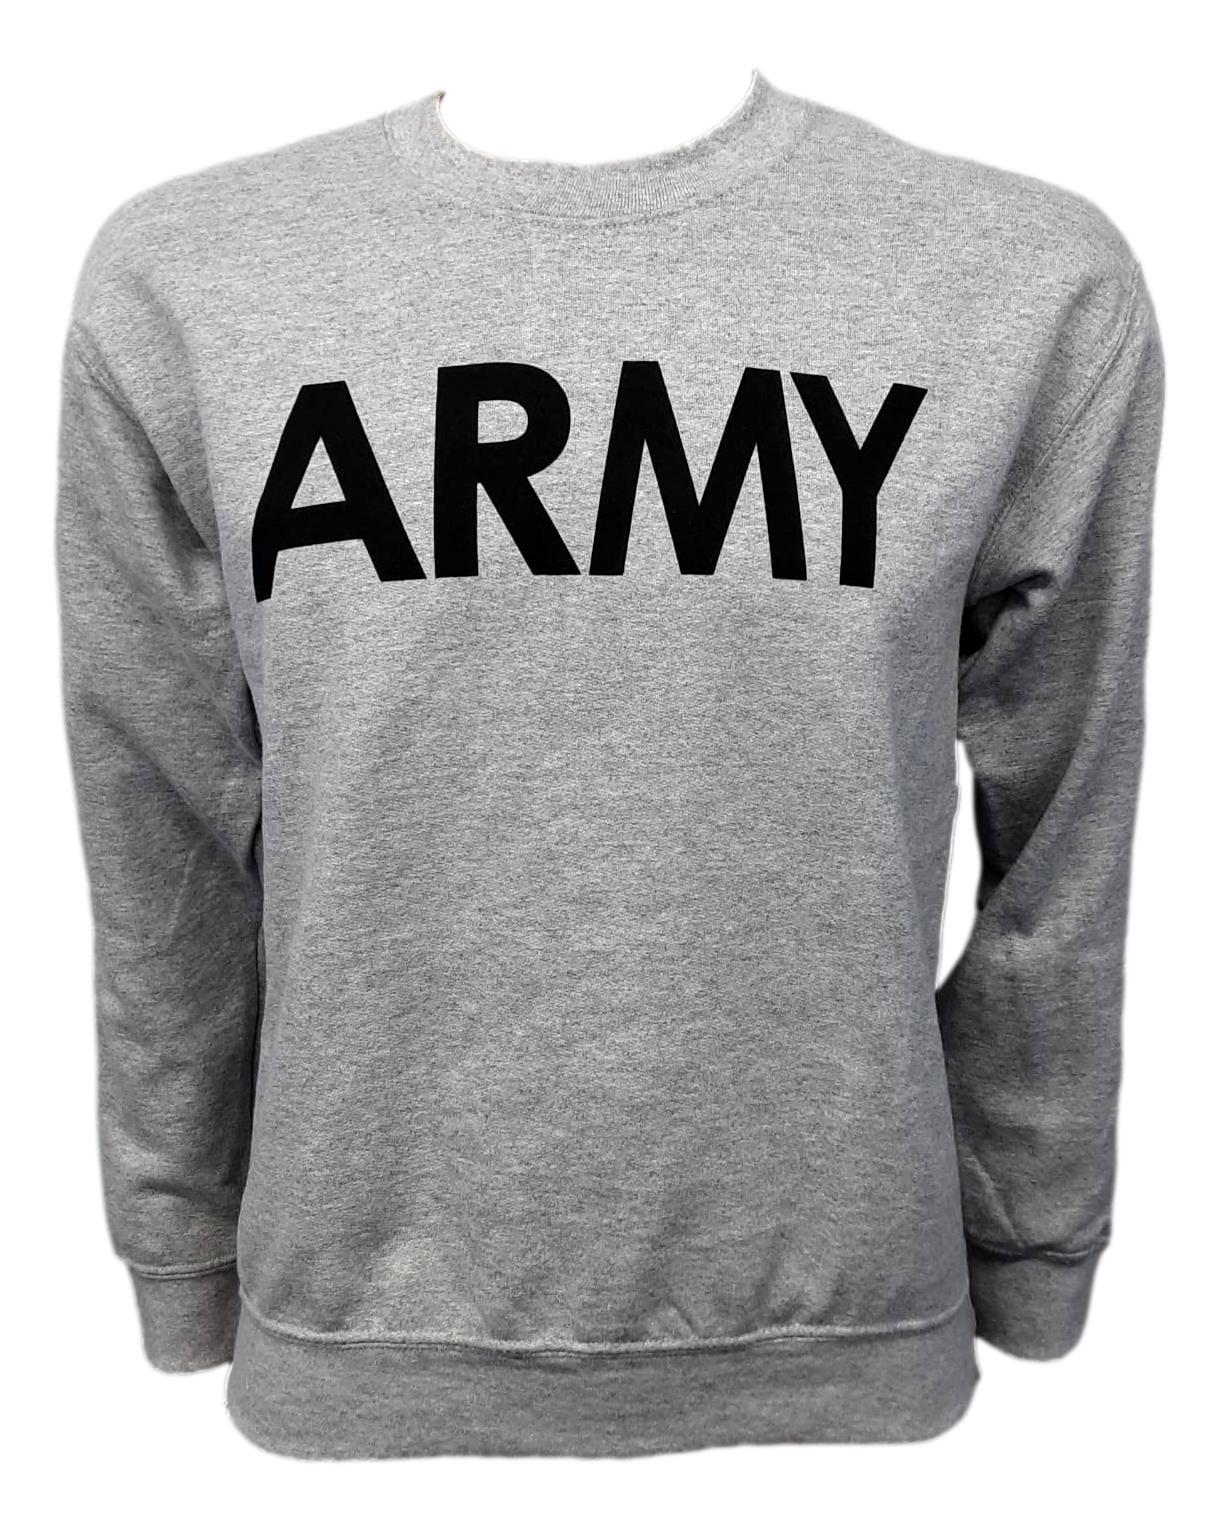 Gildan Activewear 1st Quality Army Printed Crew Neck Sweatshirt